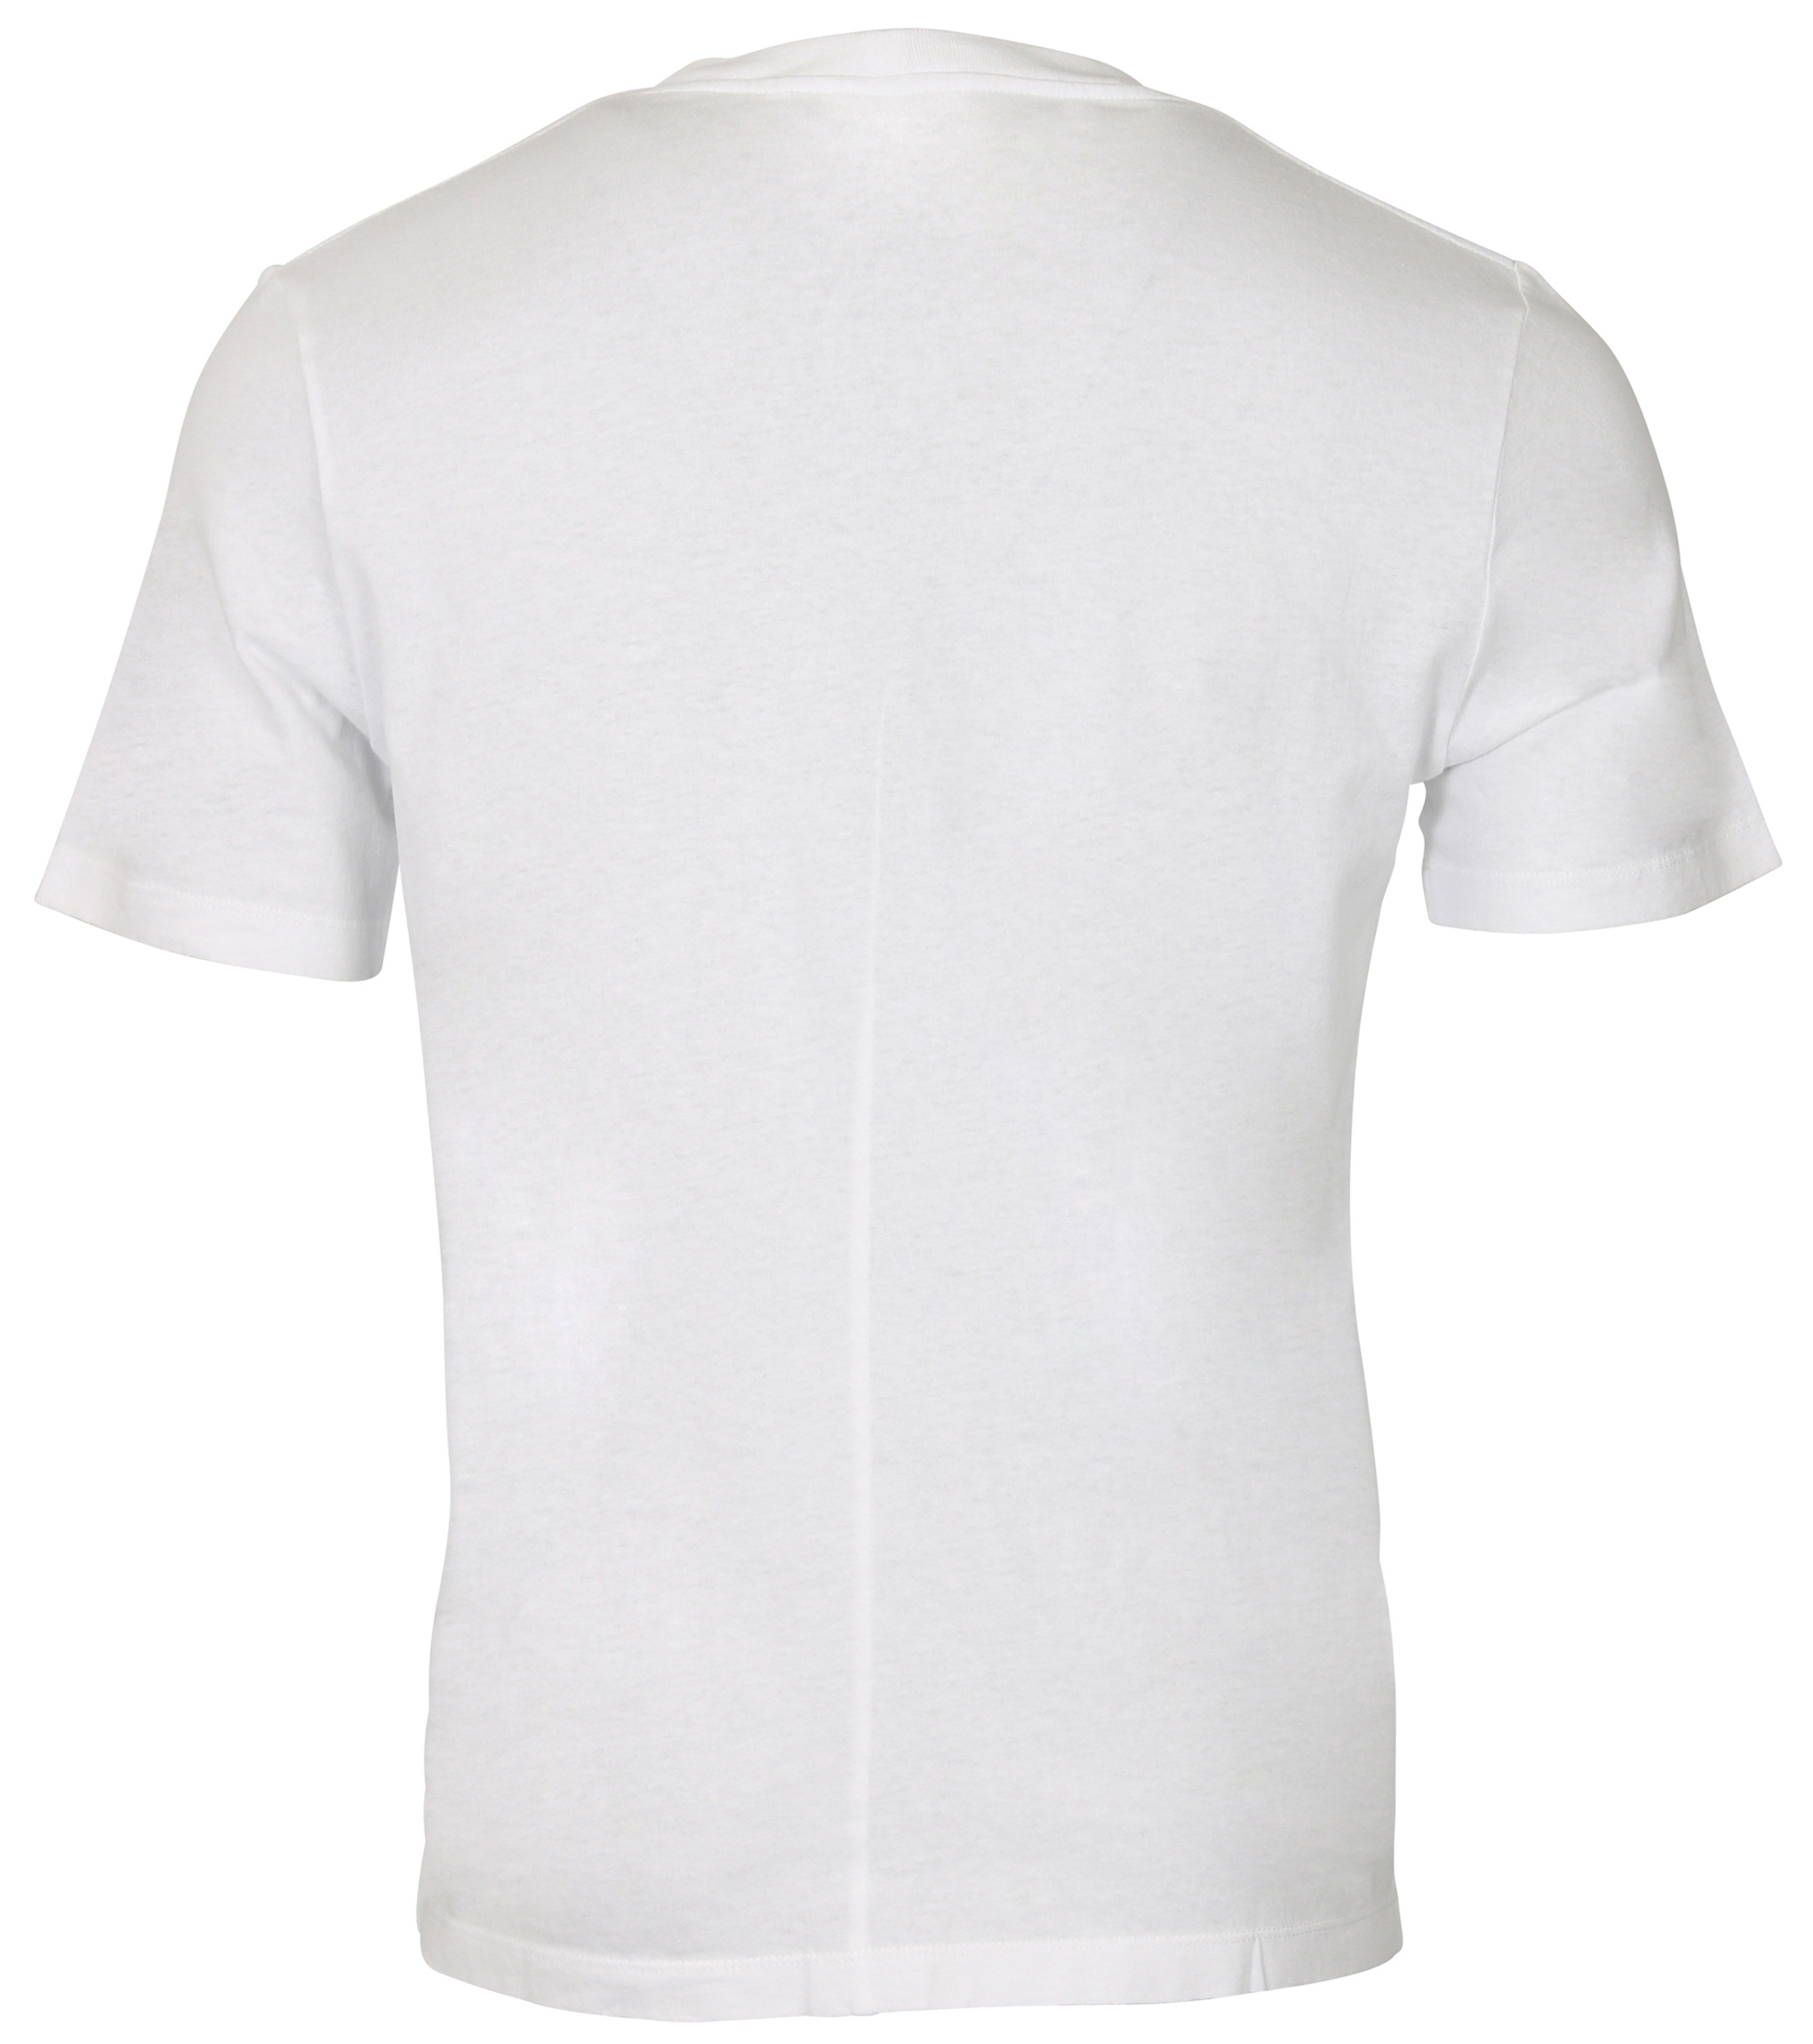 Helmut Lang Patch T-Shirt White XXL